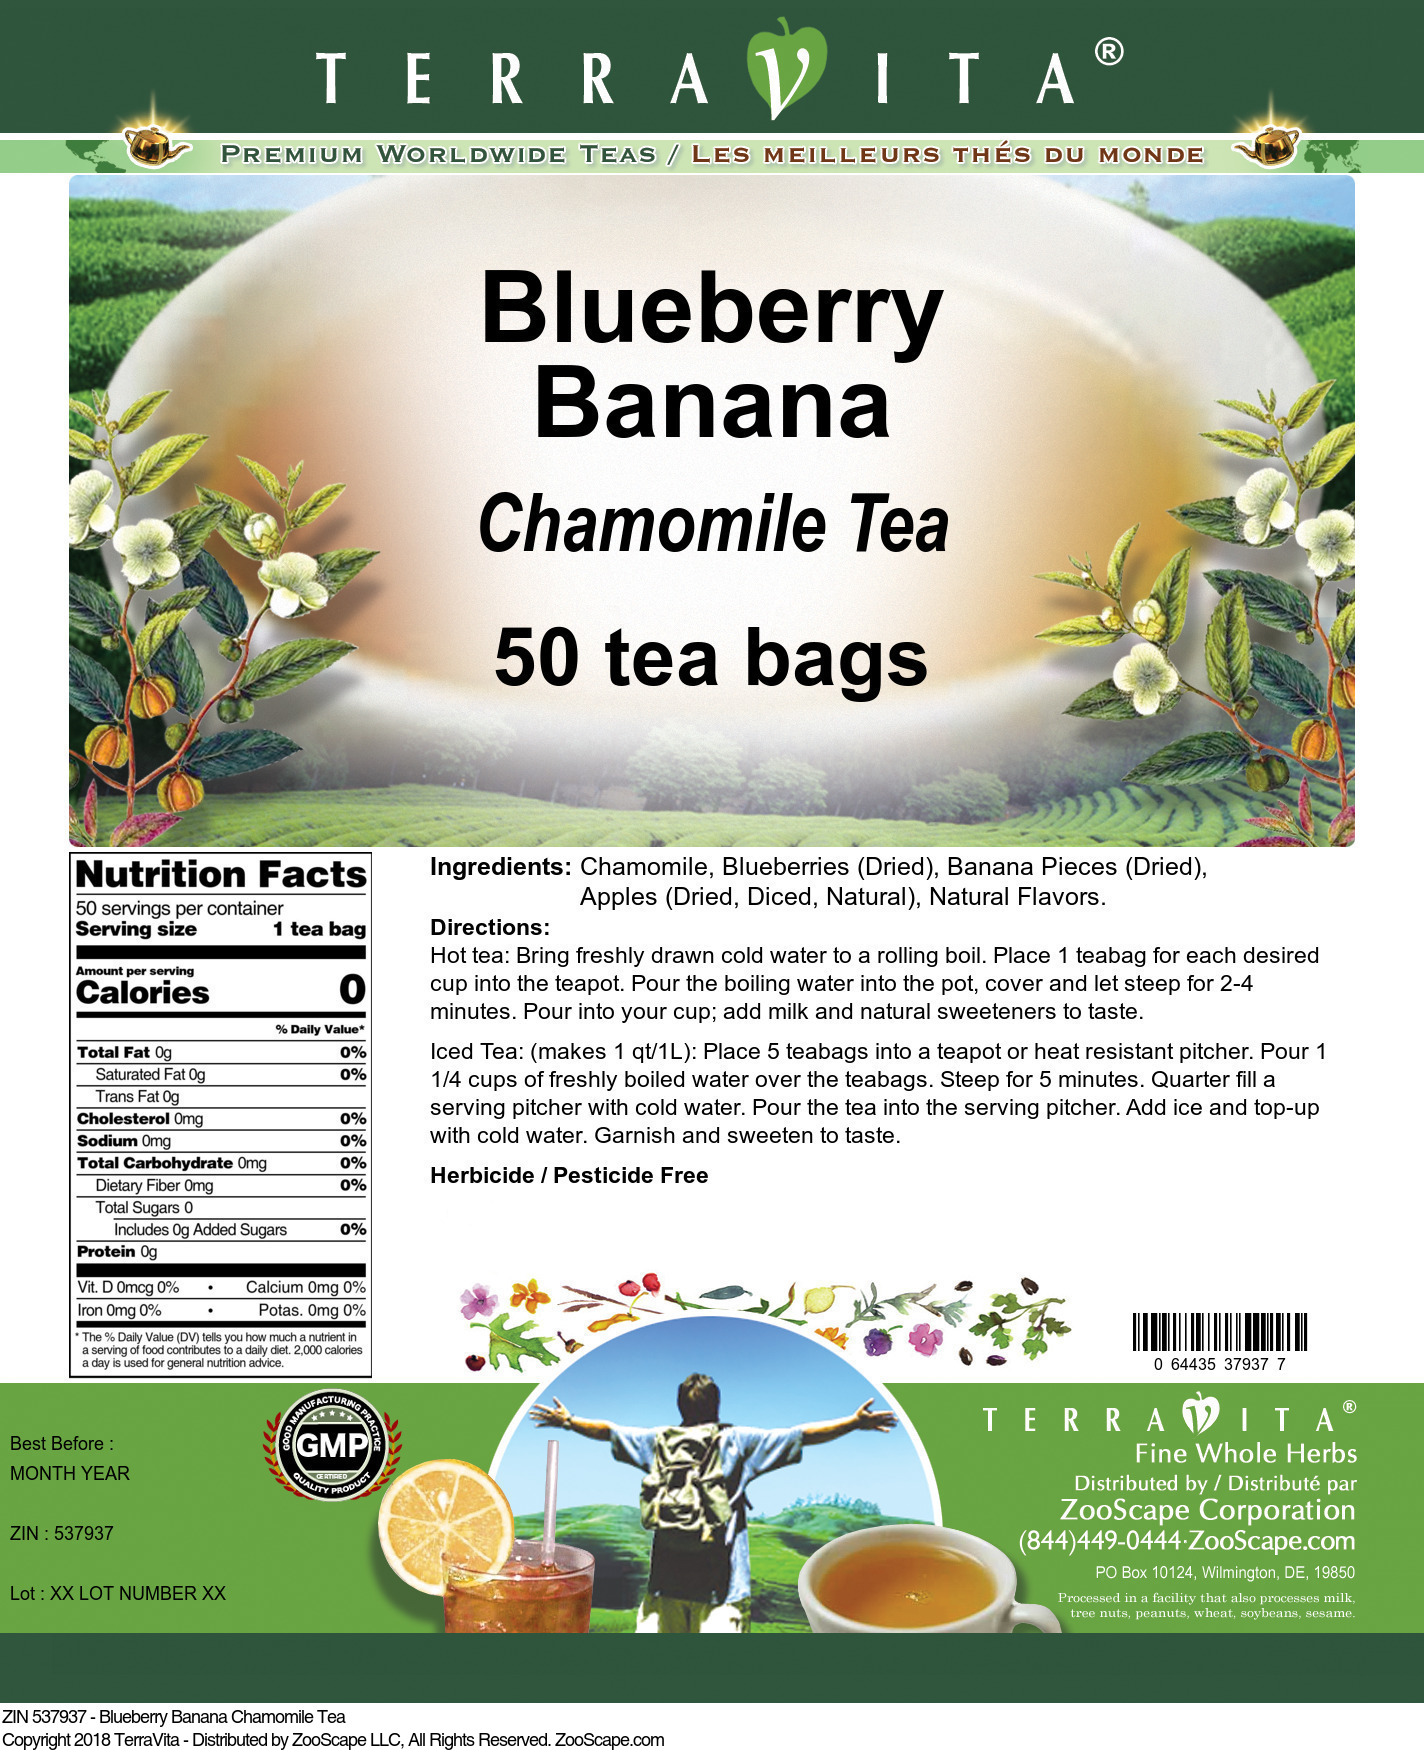 Blueberry Banana Chamomile Tea - Label